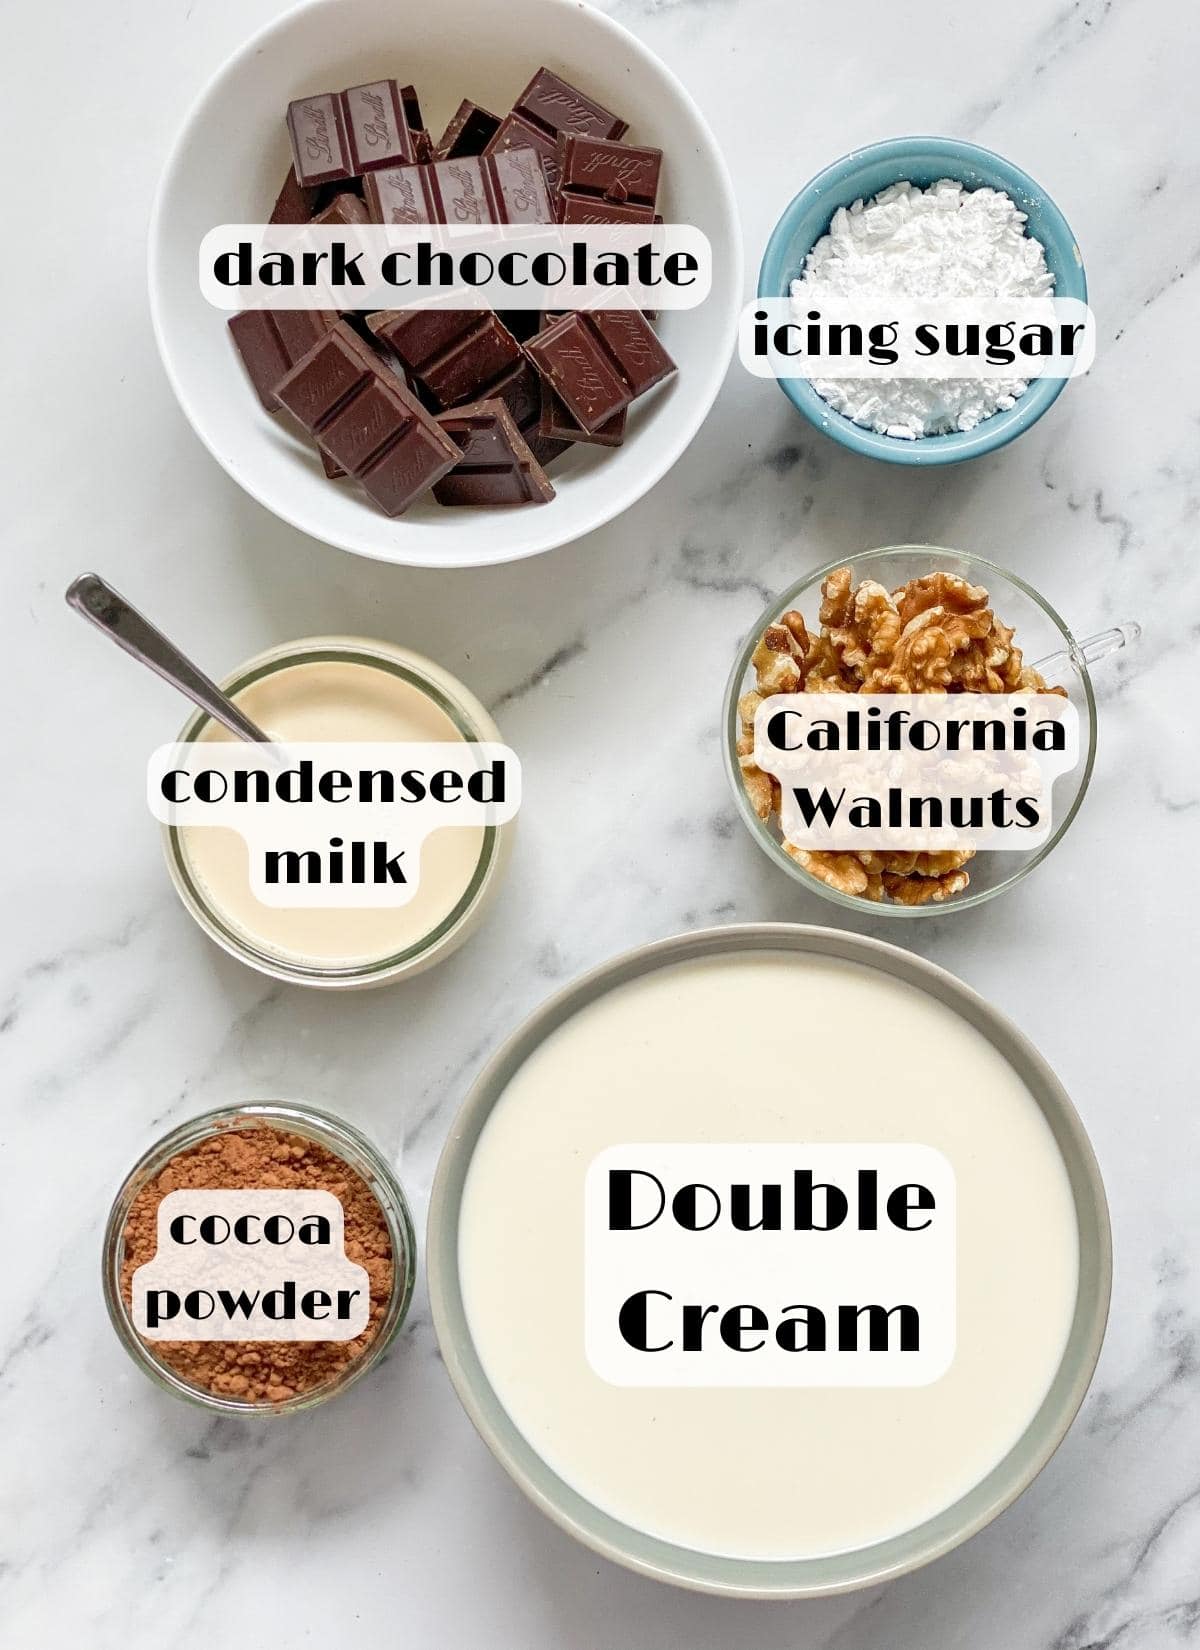 semifreddo ingredients: double cream, icing sugar, condensed milk, dark chocolate, cocoa powder, walnuts.